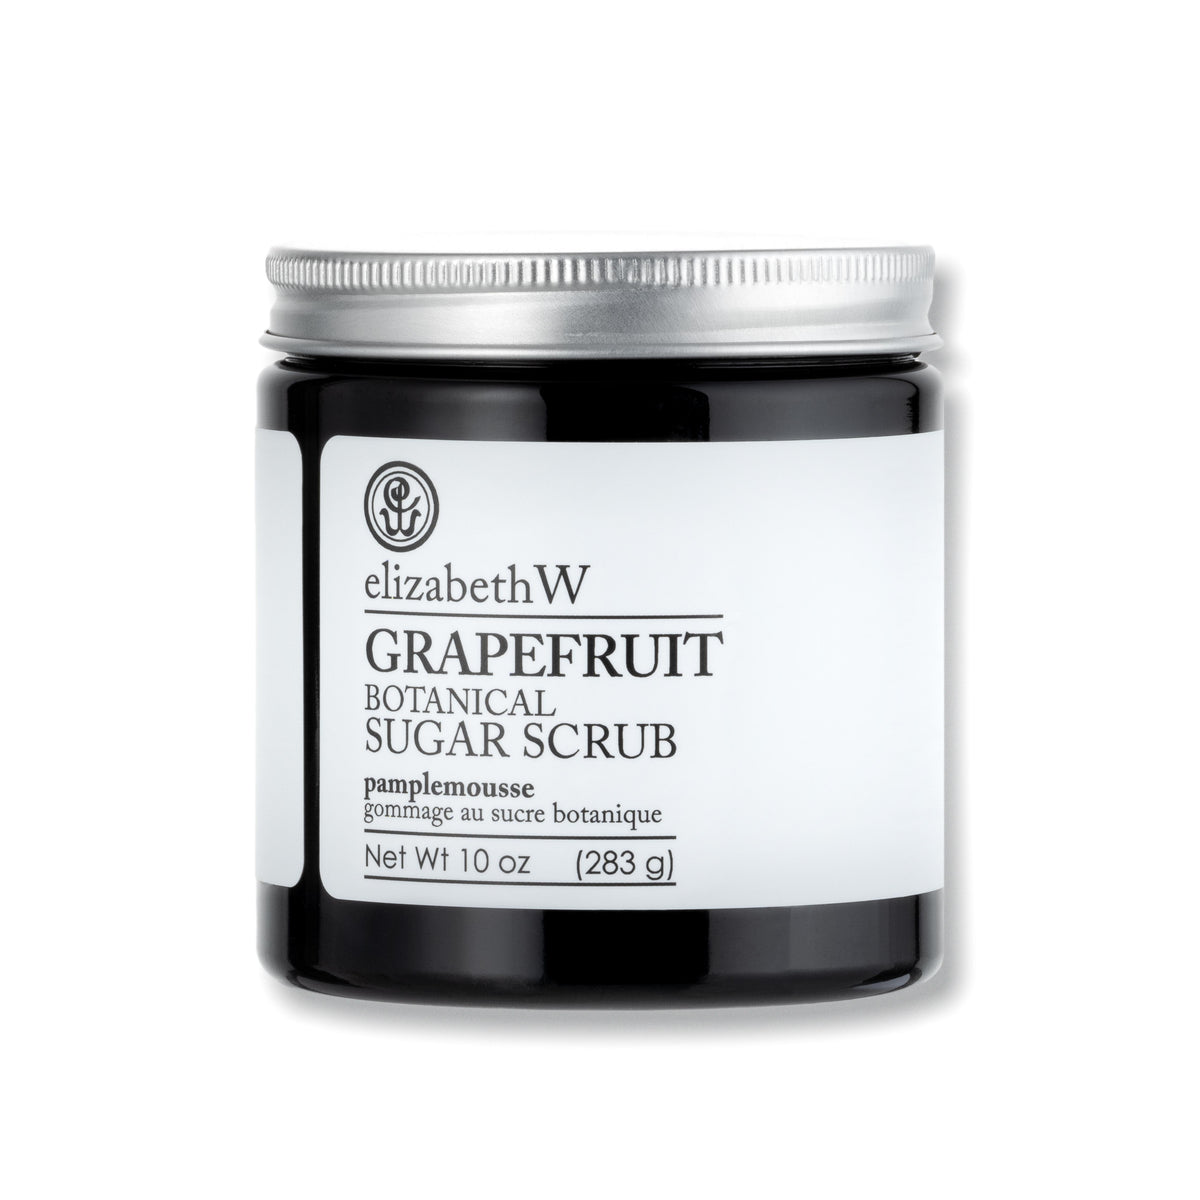 Grapefruit Sugar Scrub